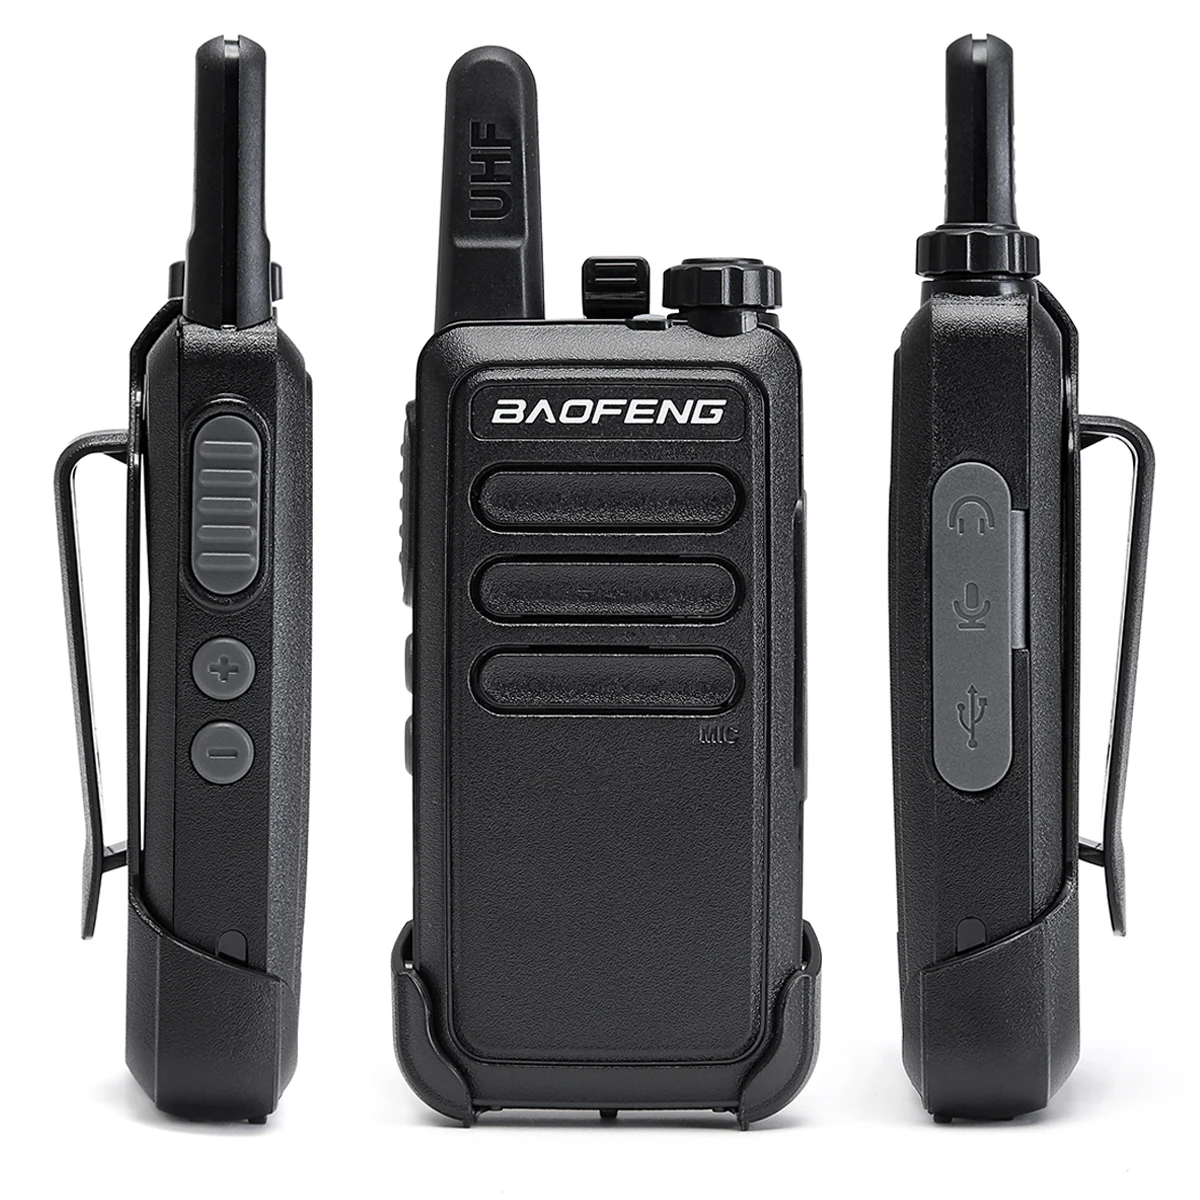 Baofeng BF-C9 Mini Walkie Talkie 400-470MHz UHF Tradio  long reachwo Way Radio Portable VOX USB Charging Handheld Transceiver enlarge